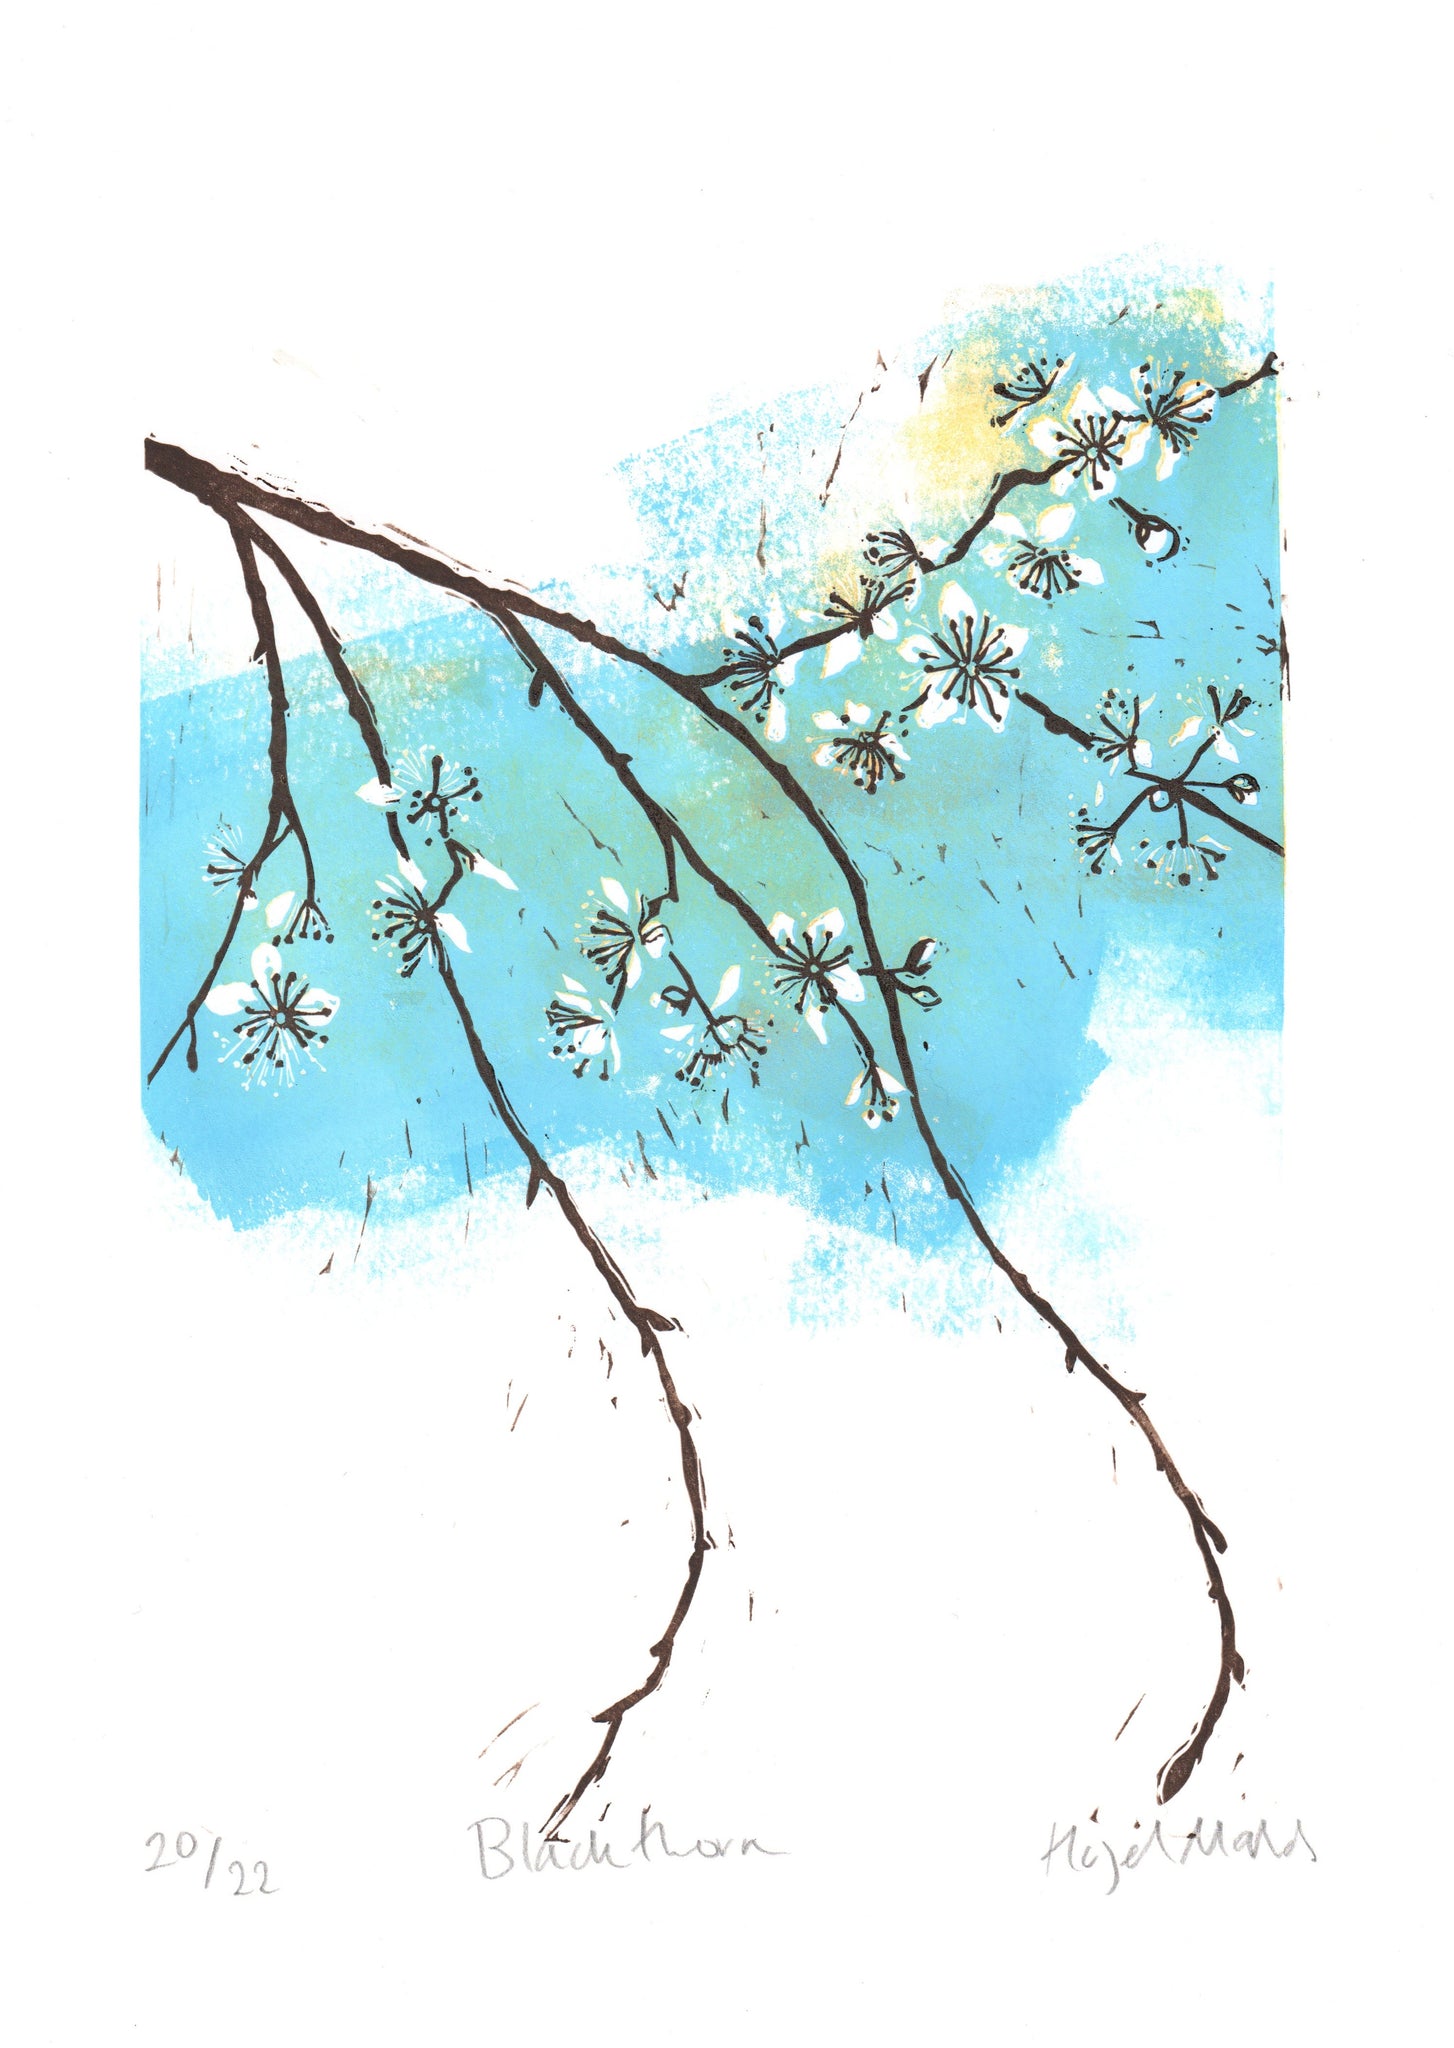 Blackthorn blossom 20/22